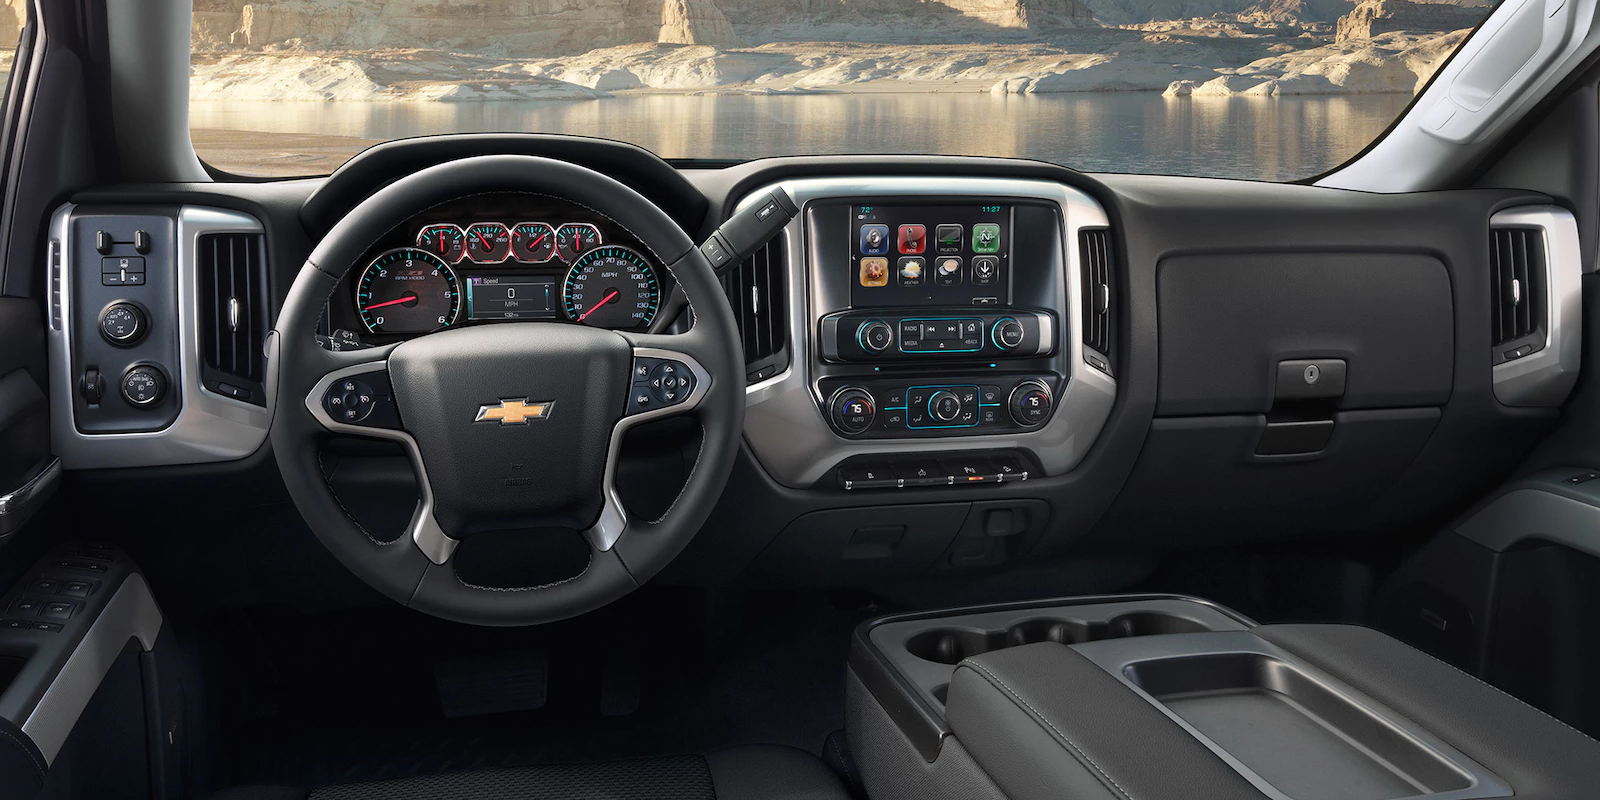 2019 Chevrolet Silverado 1500 Front Interior Dashboard Picture.png